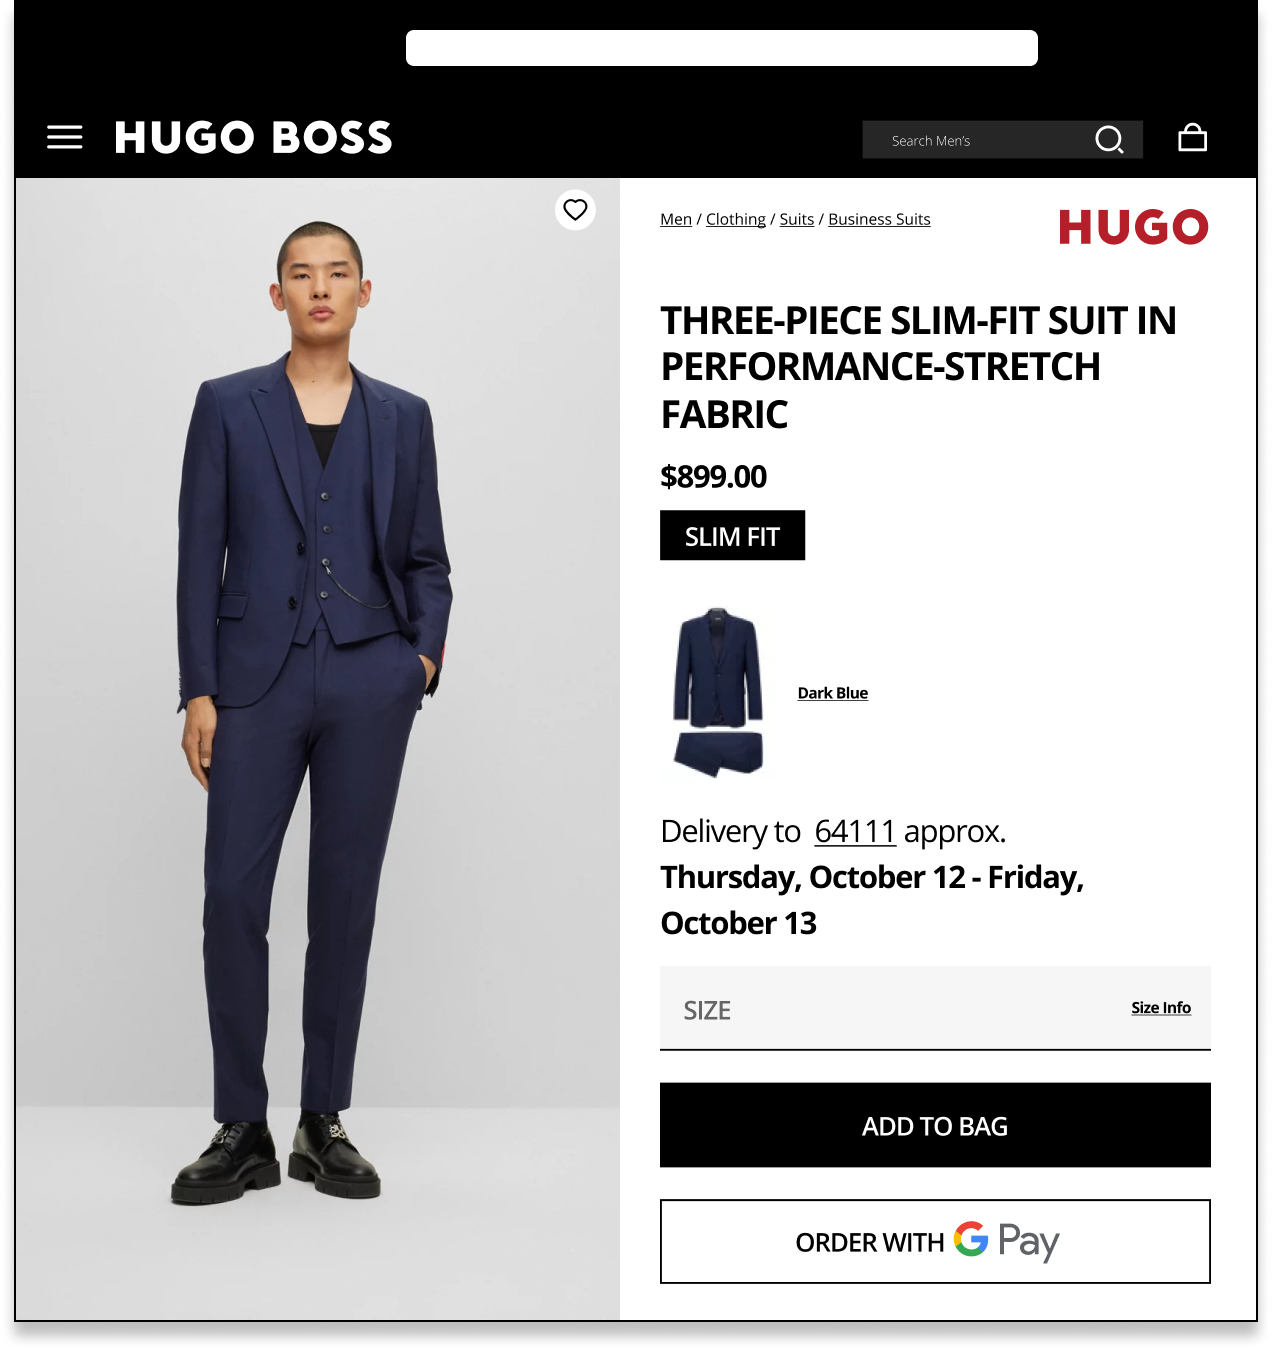 Forecasted Delivery Date on Hugo Boss Website